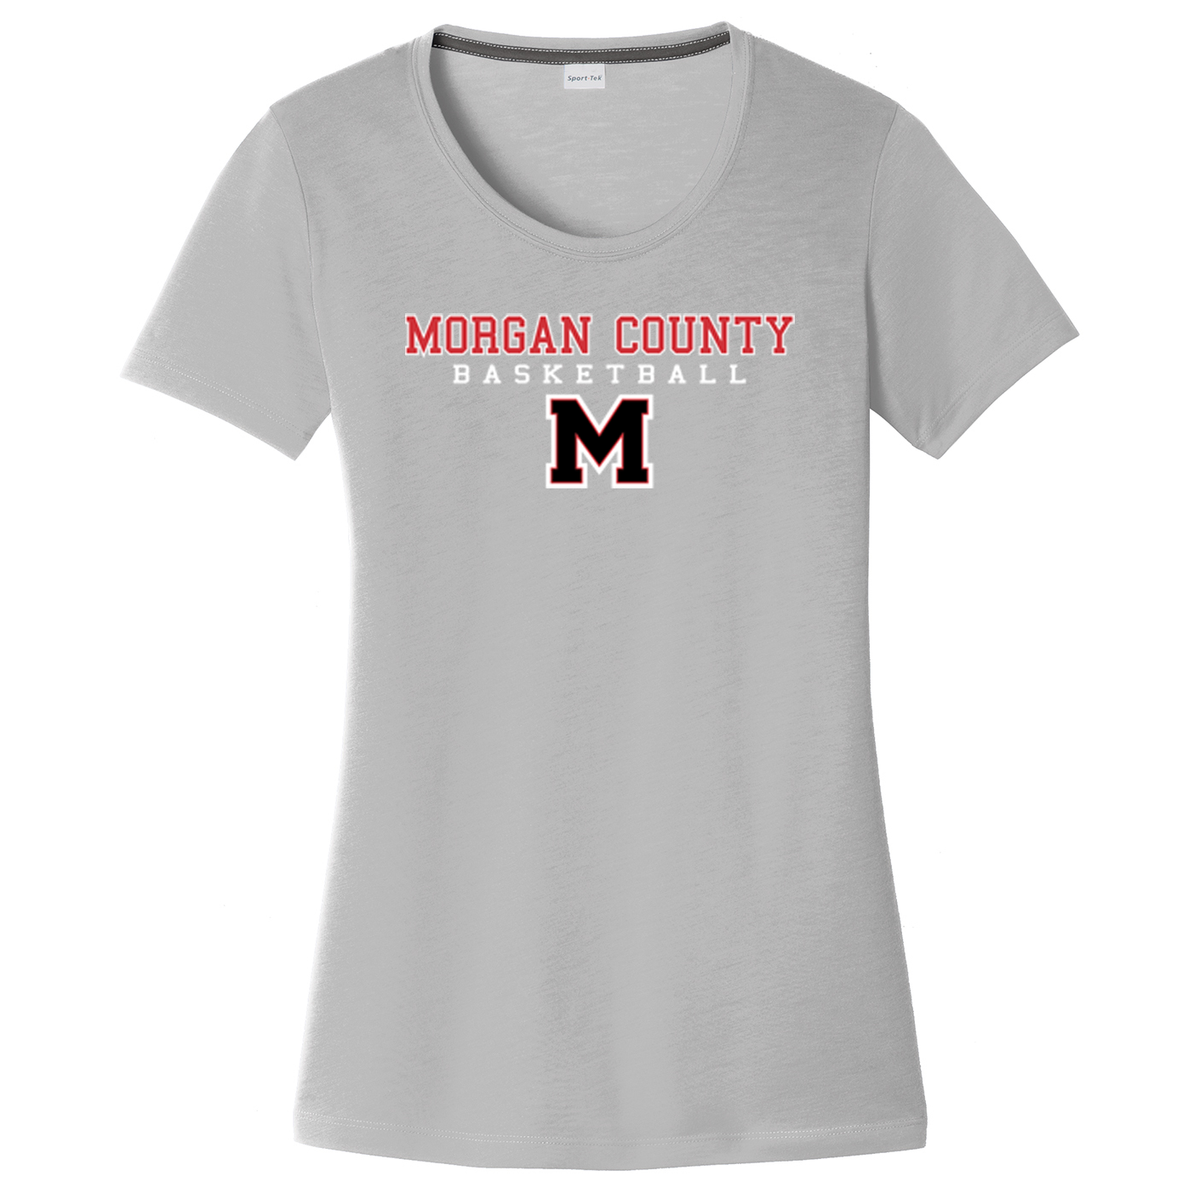 Morgan County Basketball Women's CottonTouch Performance T-Shirt